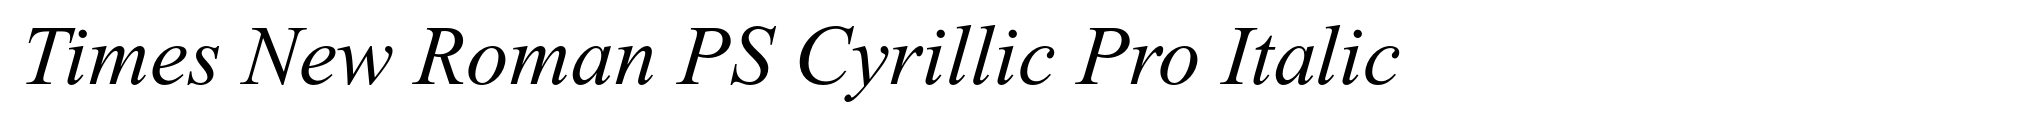 Times New Roman PS Cyrillic Pro Italic image